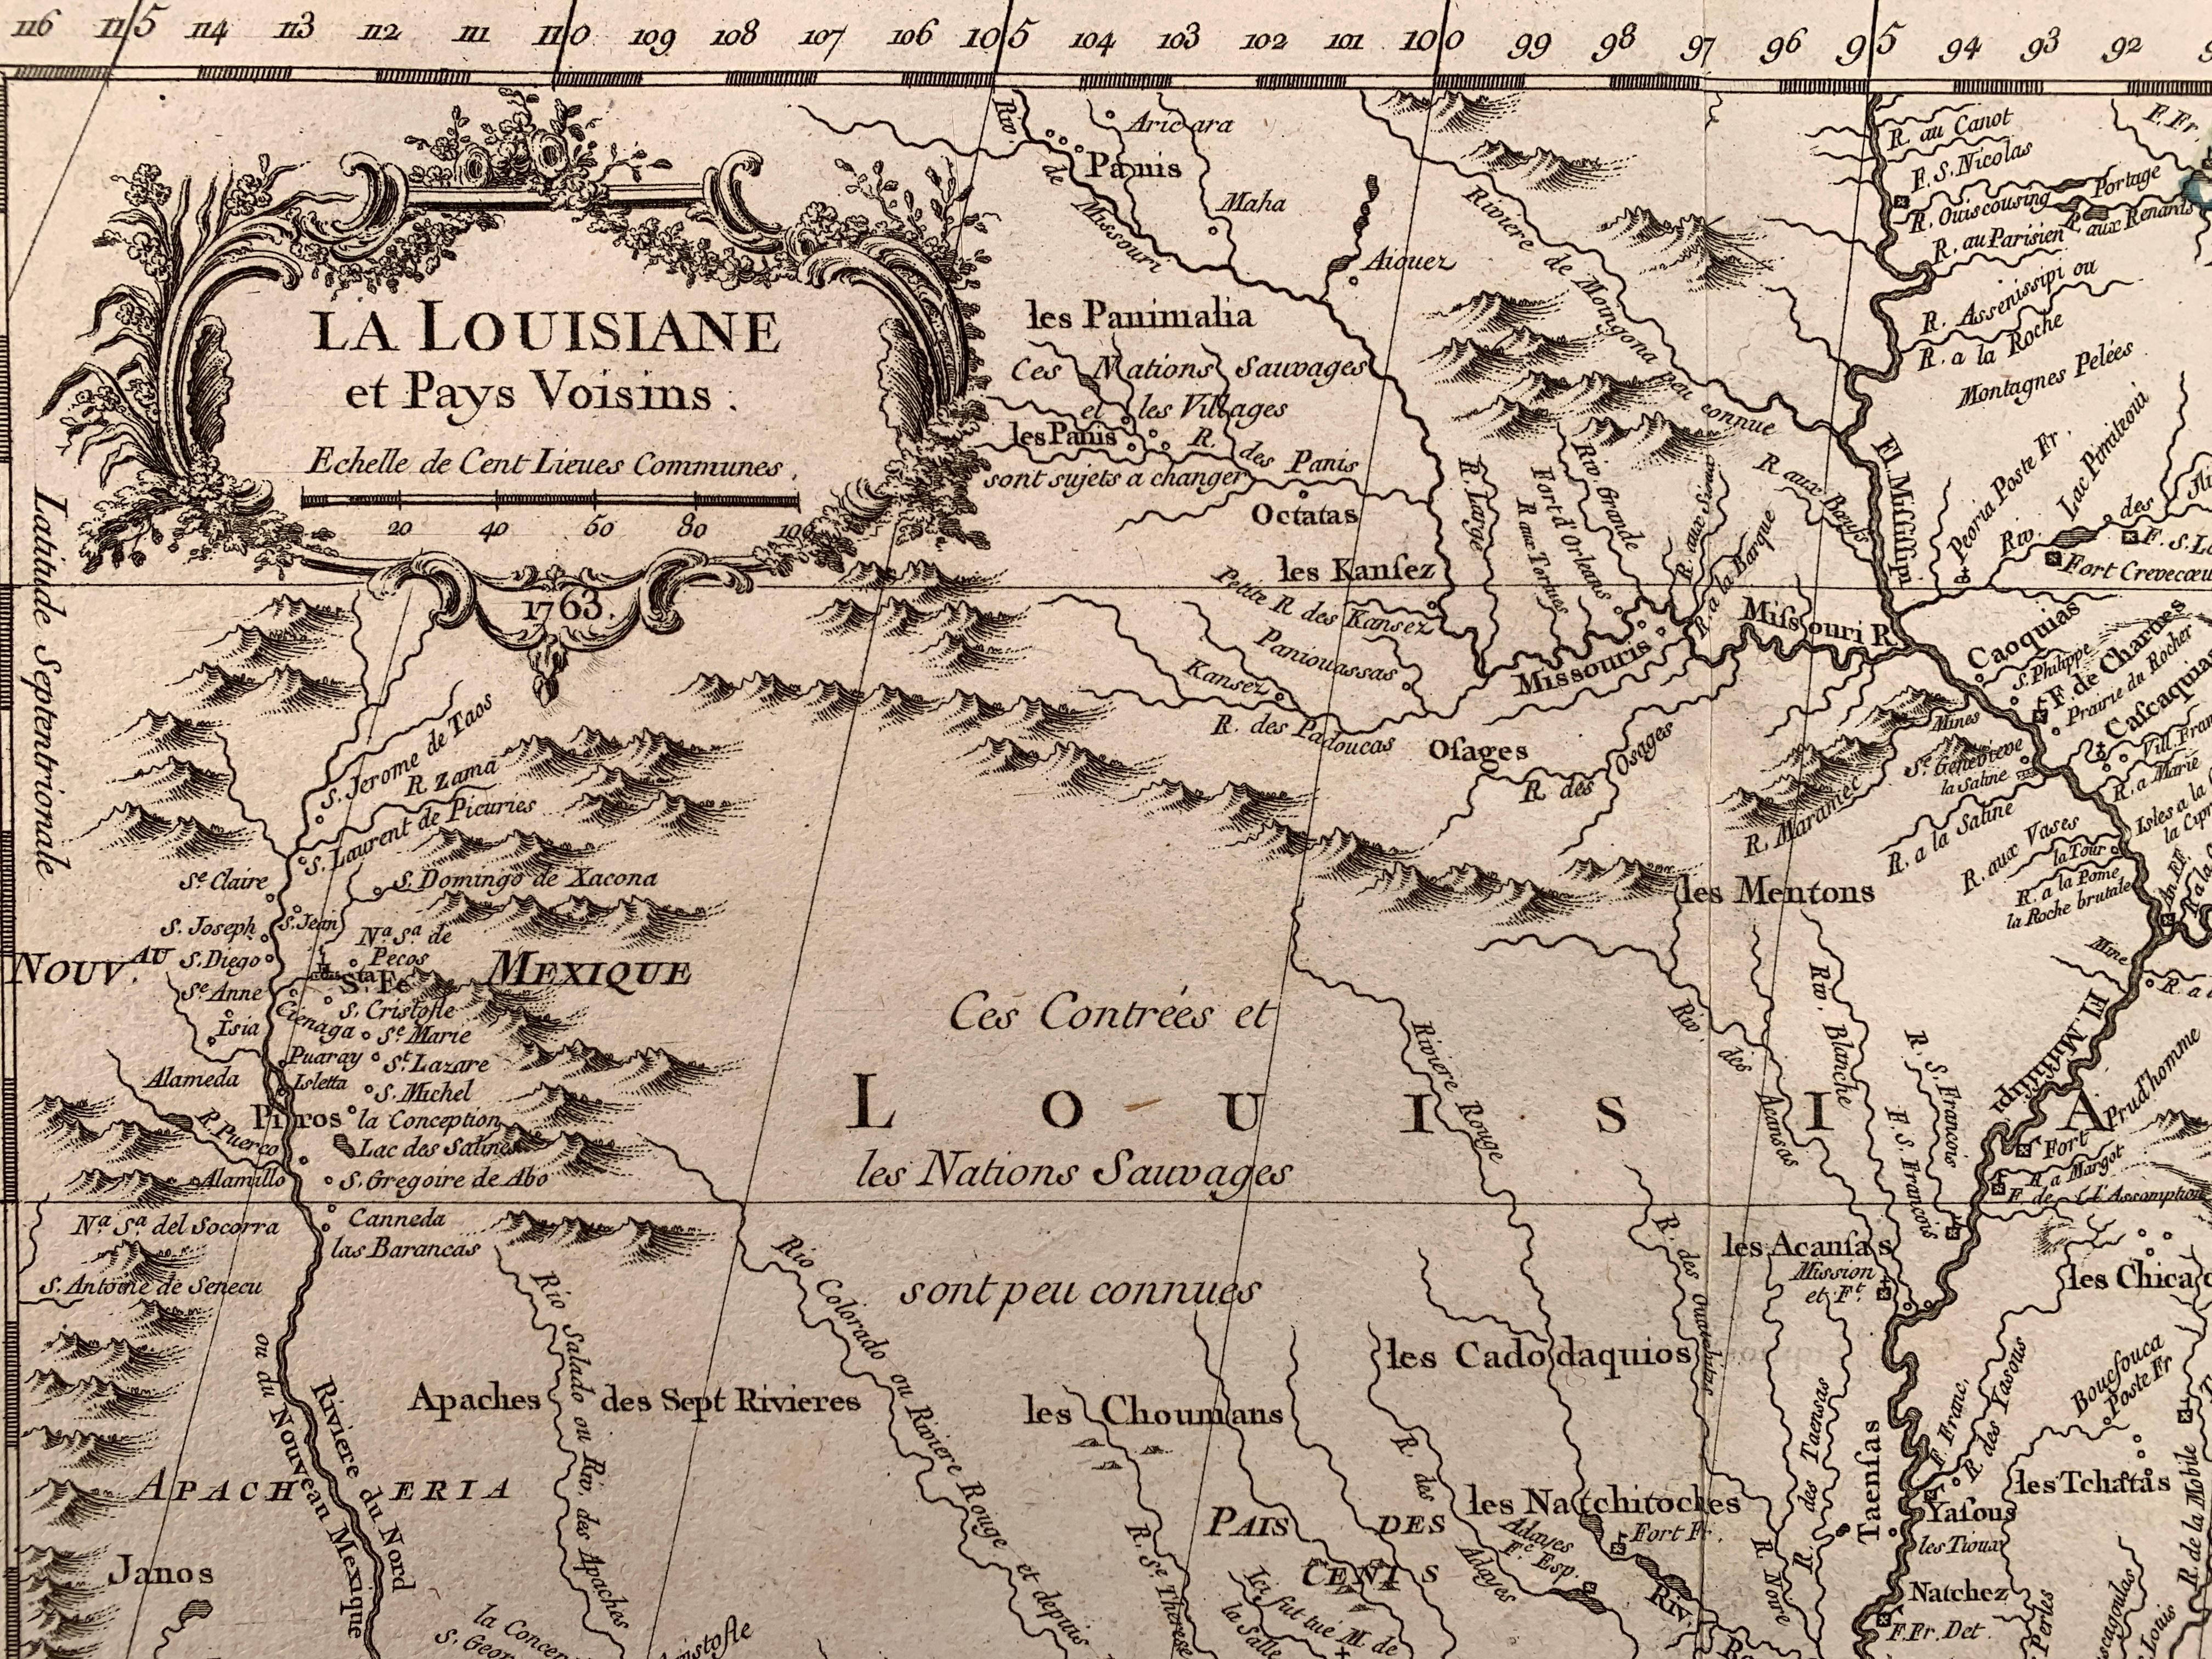 La Louisiane et Pays Voisins (Louisiana and surrounding areas) by Bellin - Print by Jacques-Nicolas Bellin